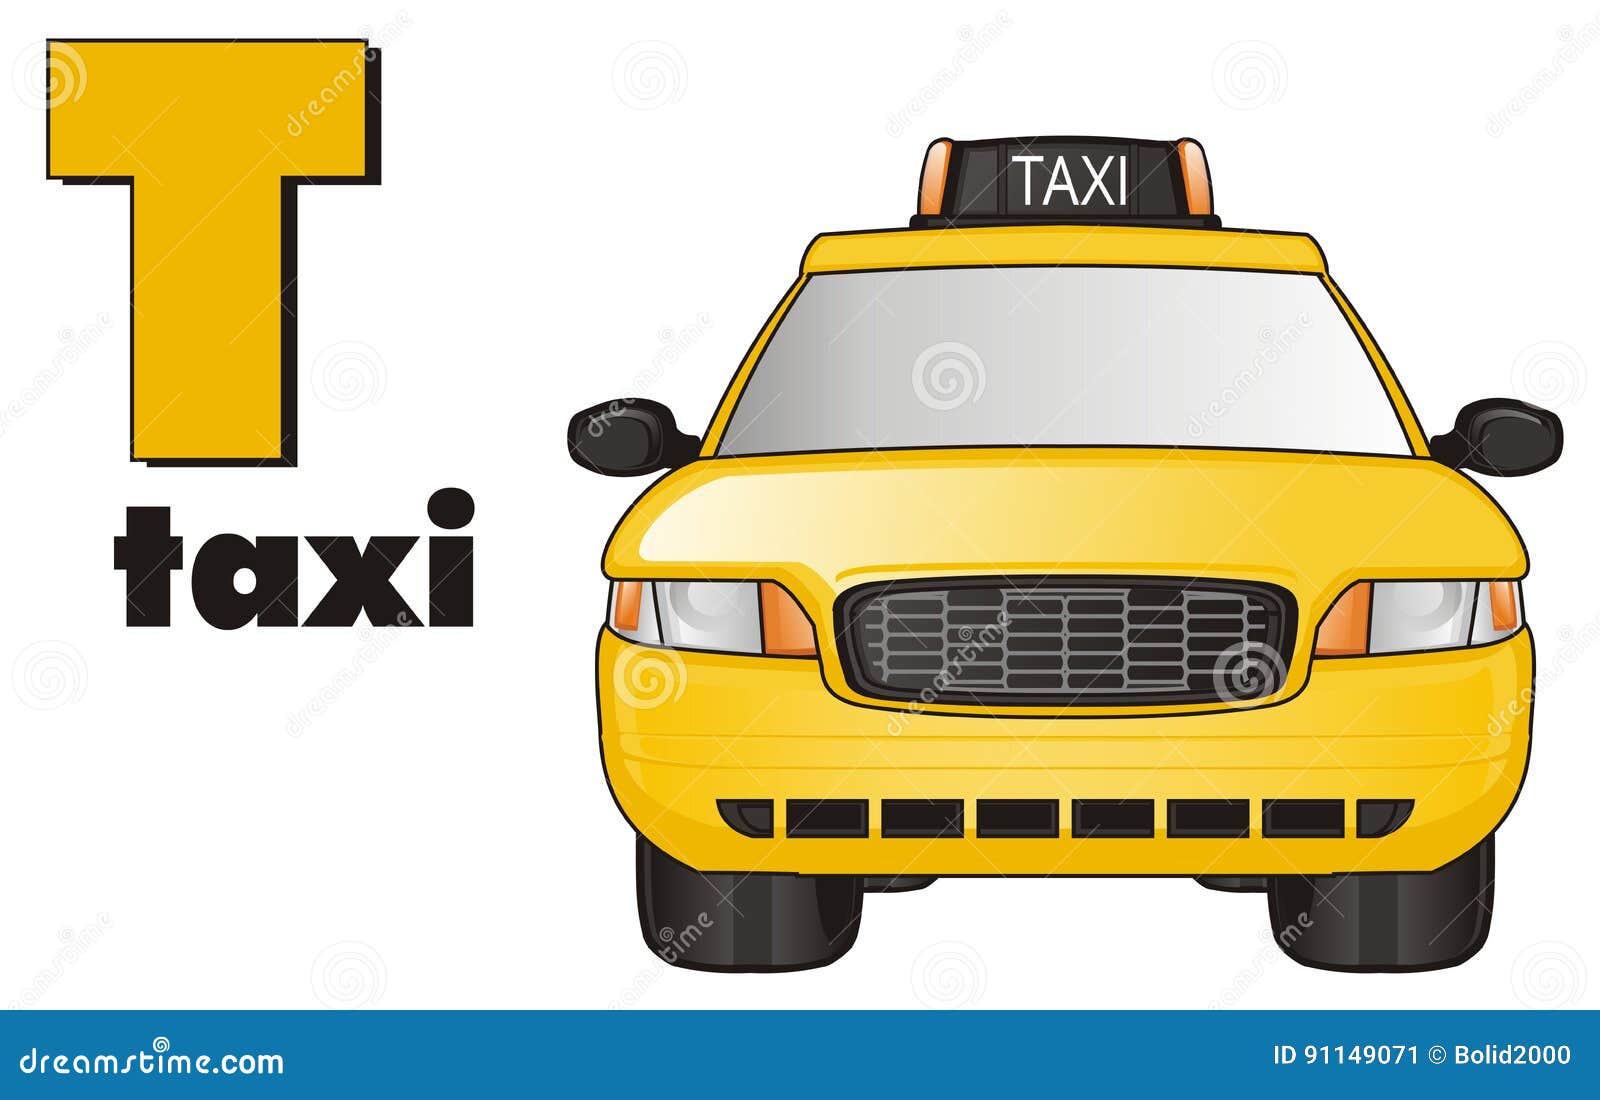 Найди слова такси. Такси вектор. Логотип такси. Машина такси на прозрачном фоне. Такси картинка для детей.